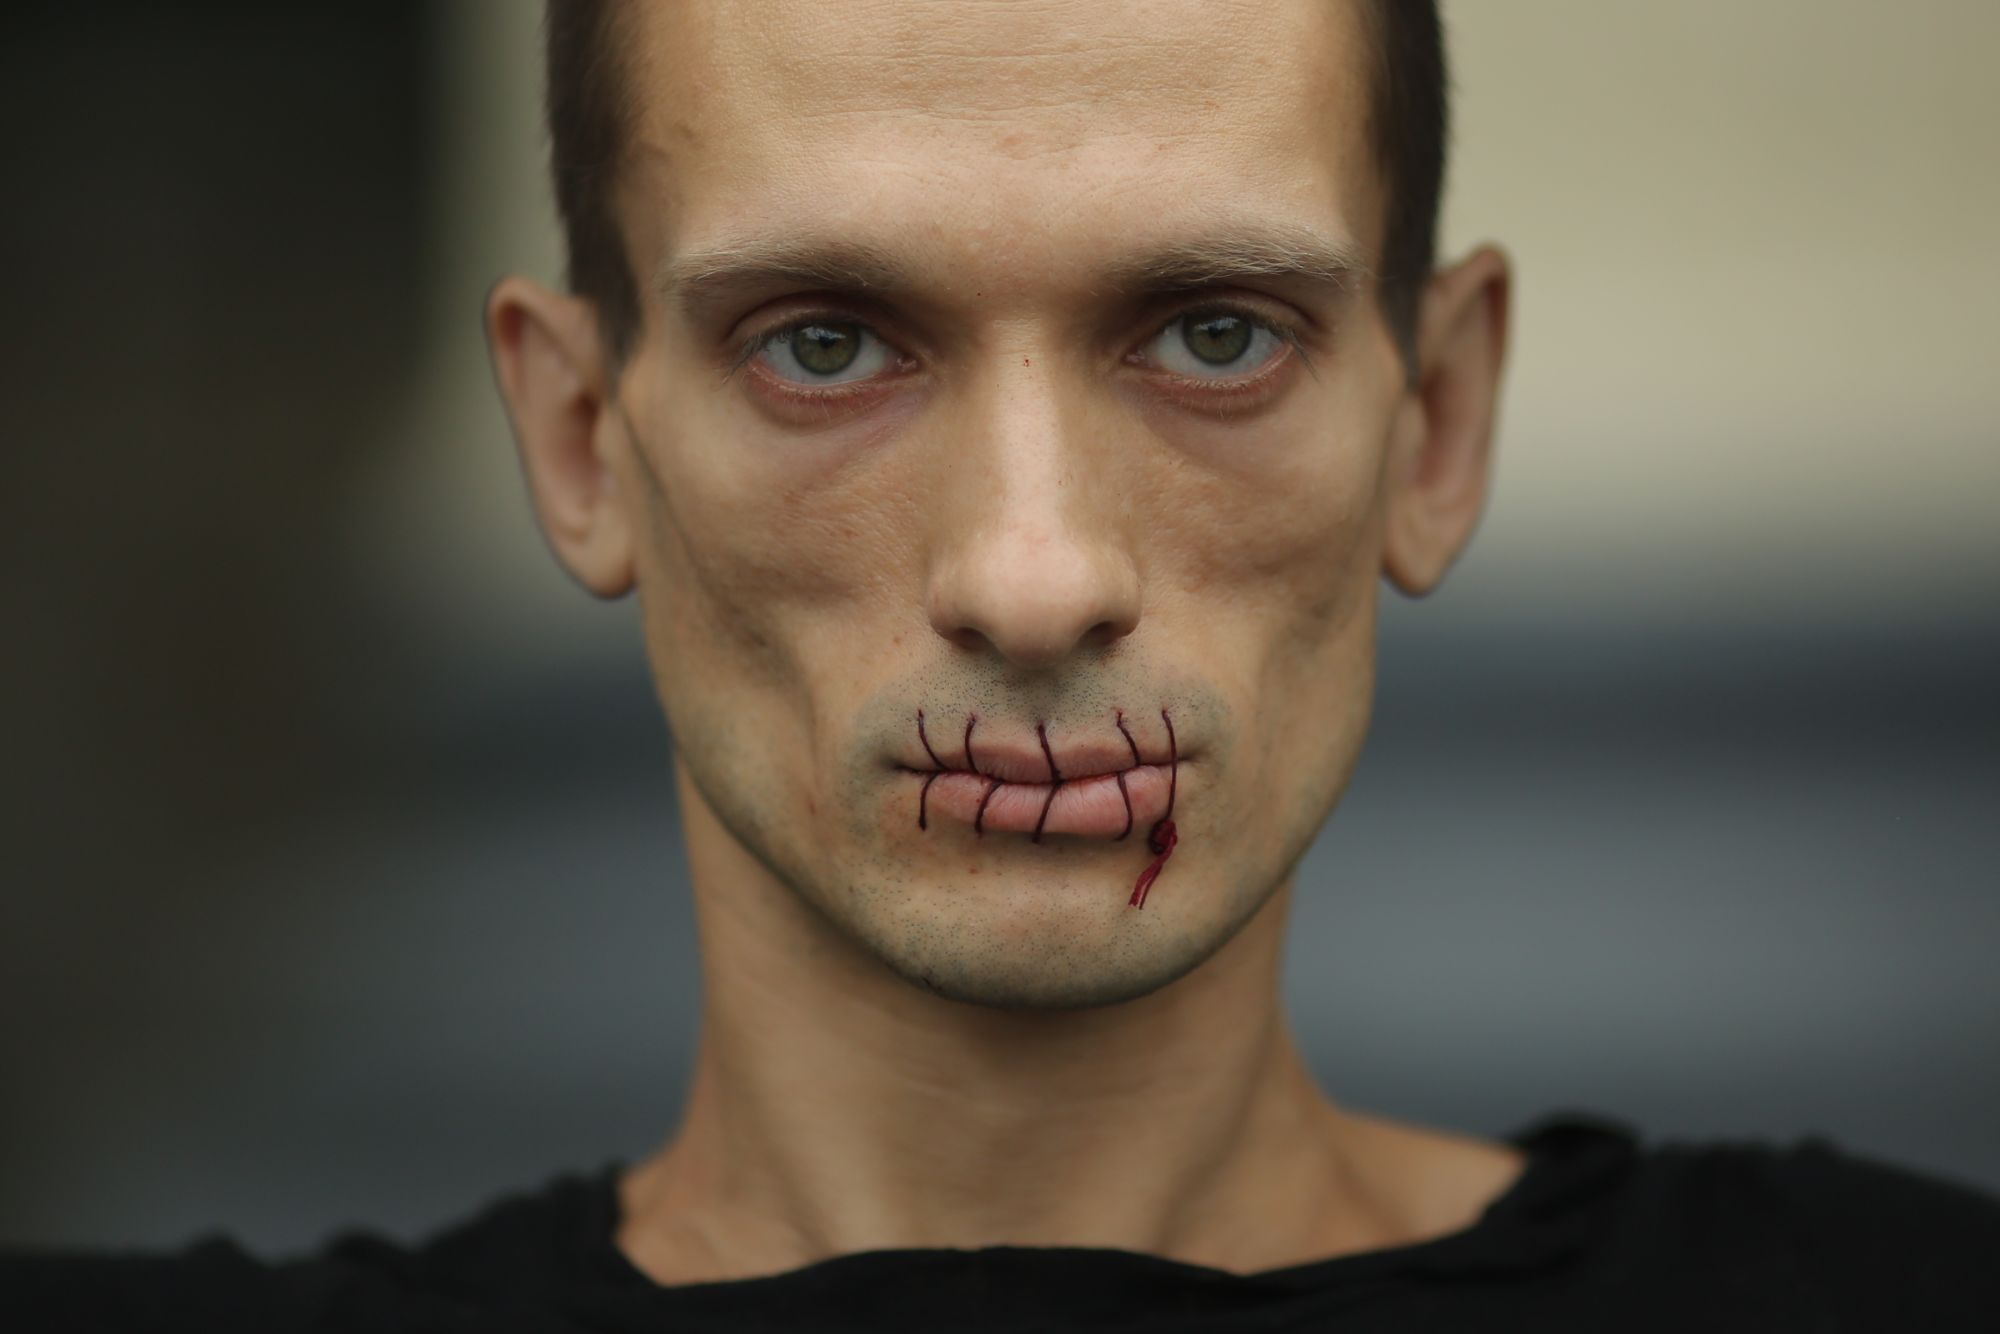 proty pavlensky seam 2012 russian art